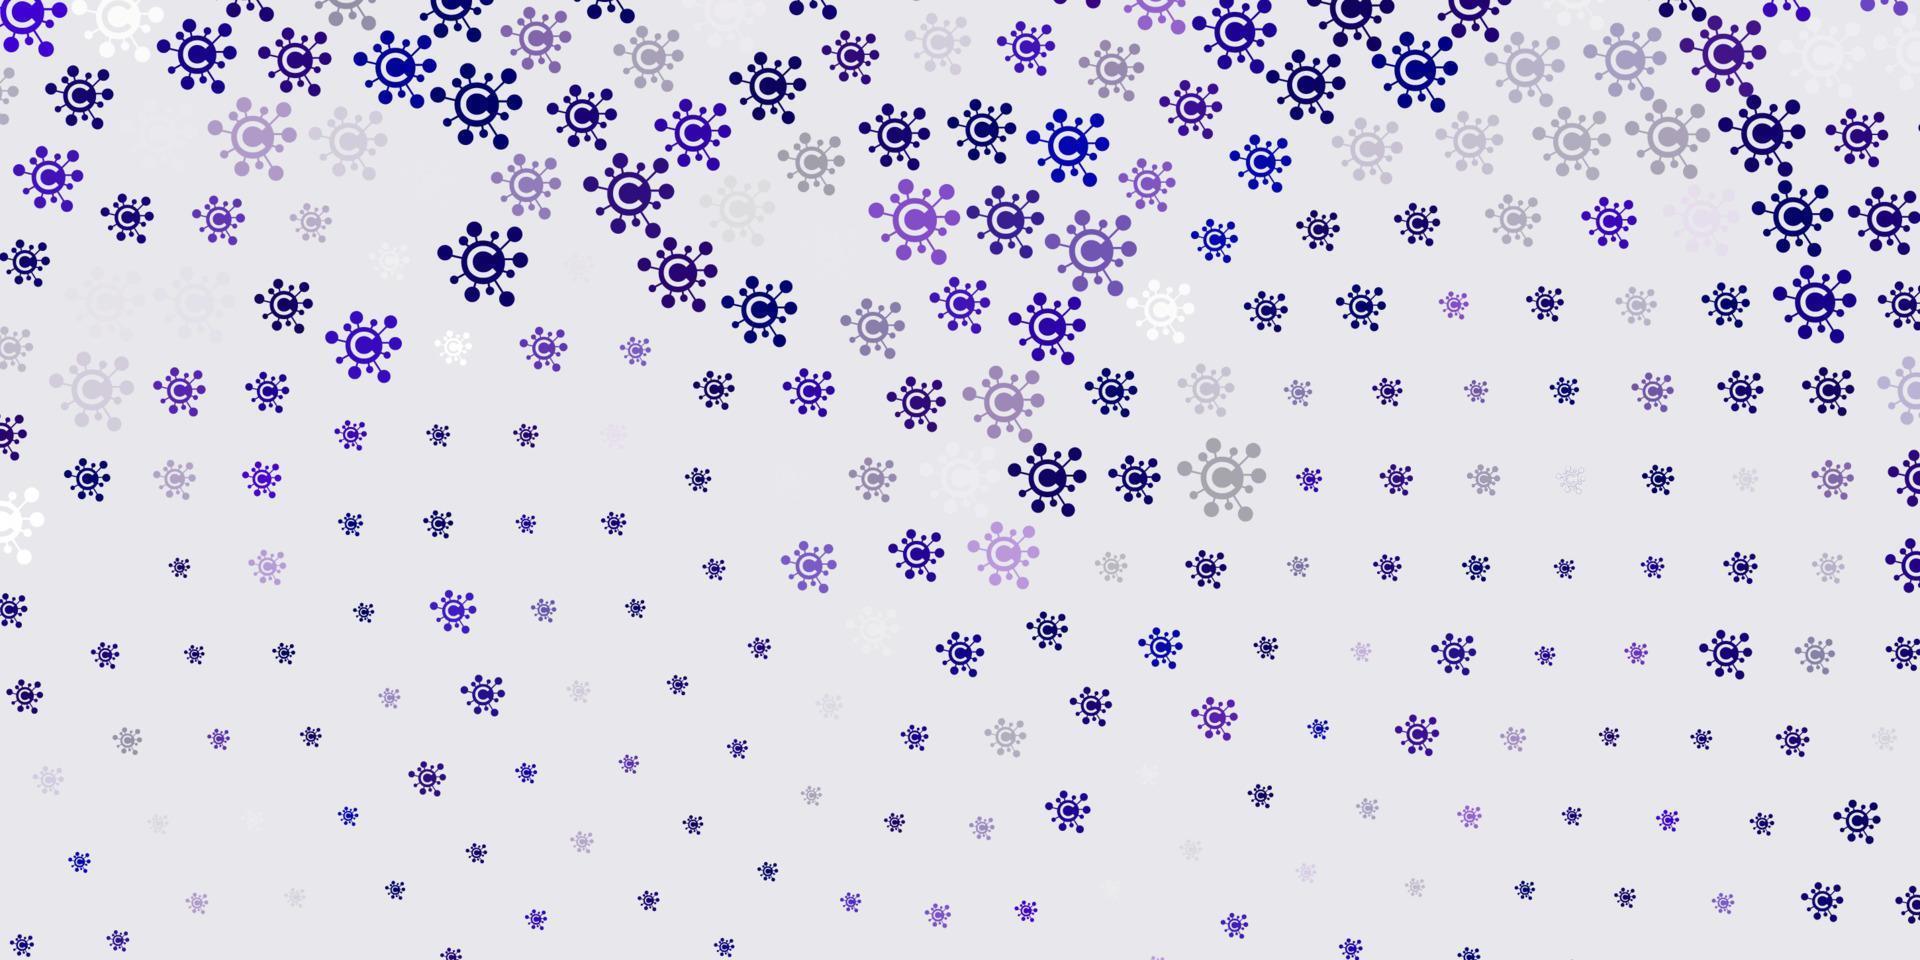 Light Purple vector texture with disease symbols.